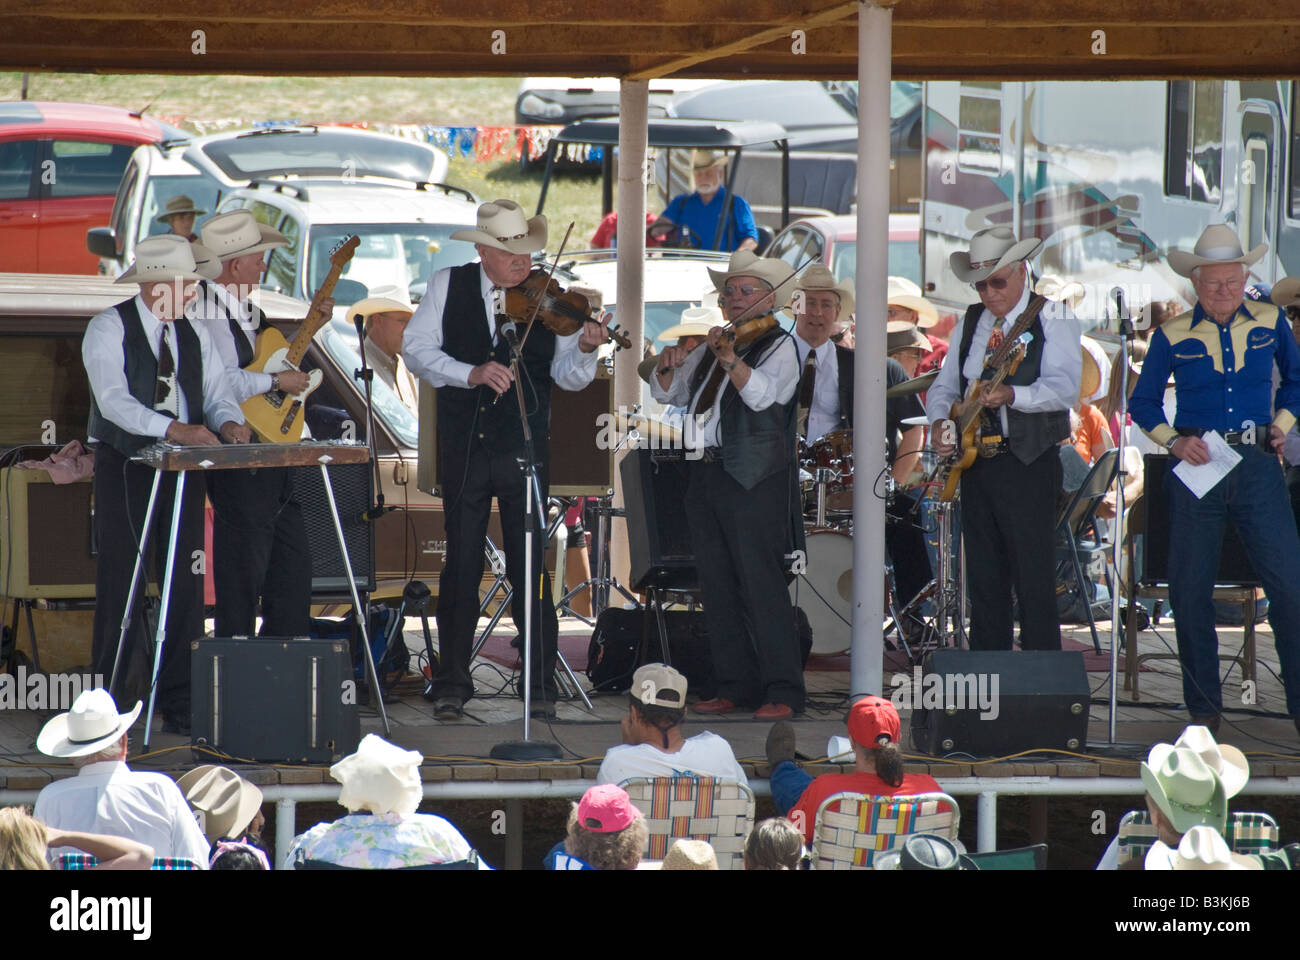 Texas Turkey annual Bob Wills Day celebration Texas Playboys western swing band in concert Stock Photo